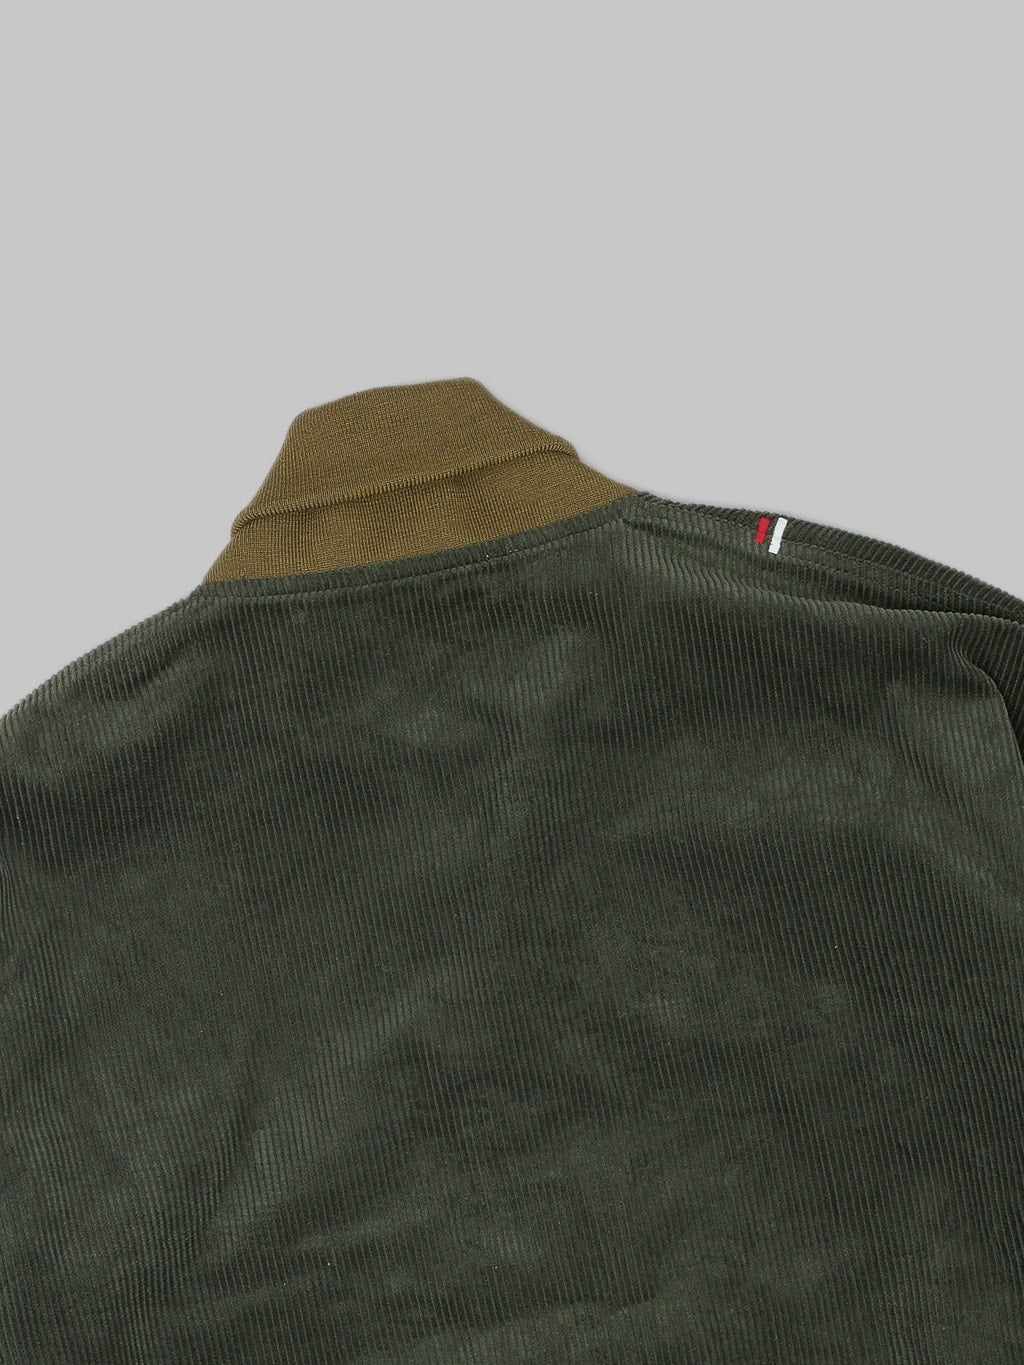 Tanuki Sazanami Corduroy Bayberry Dyed Green Jacket back collar